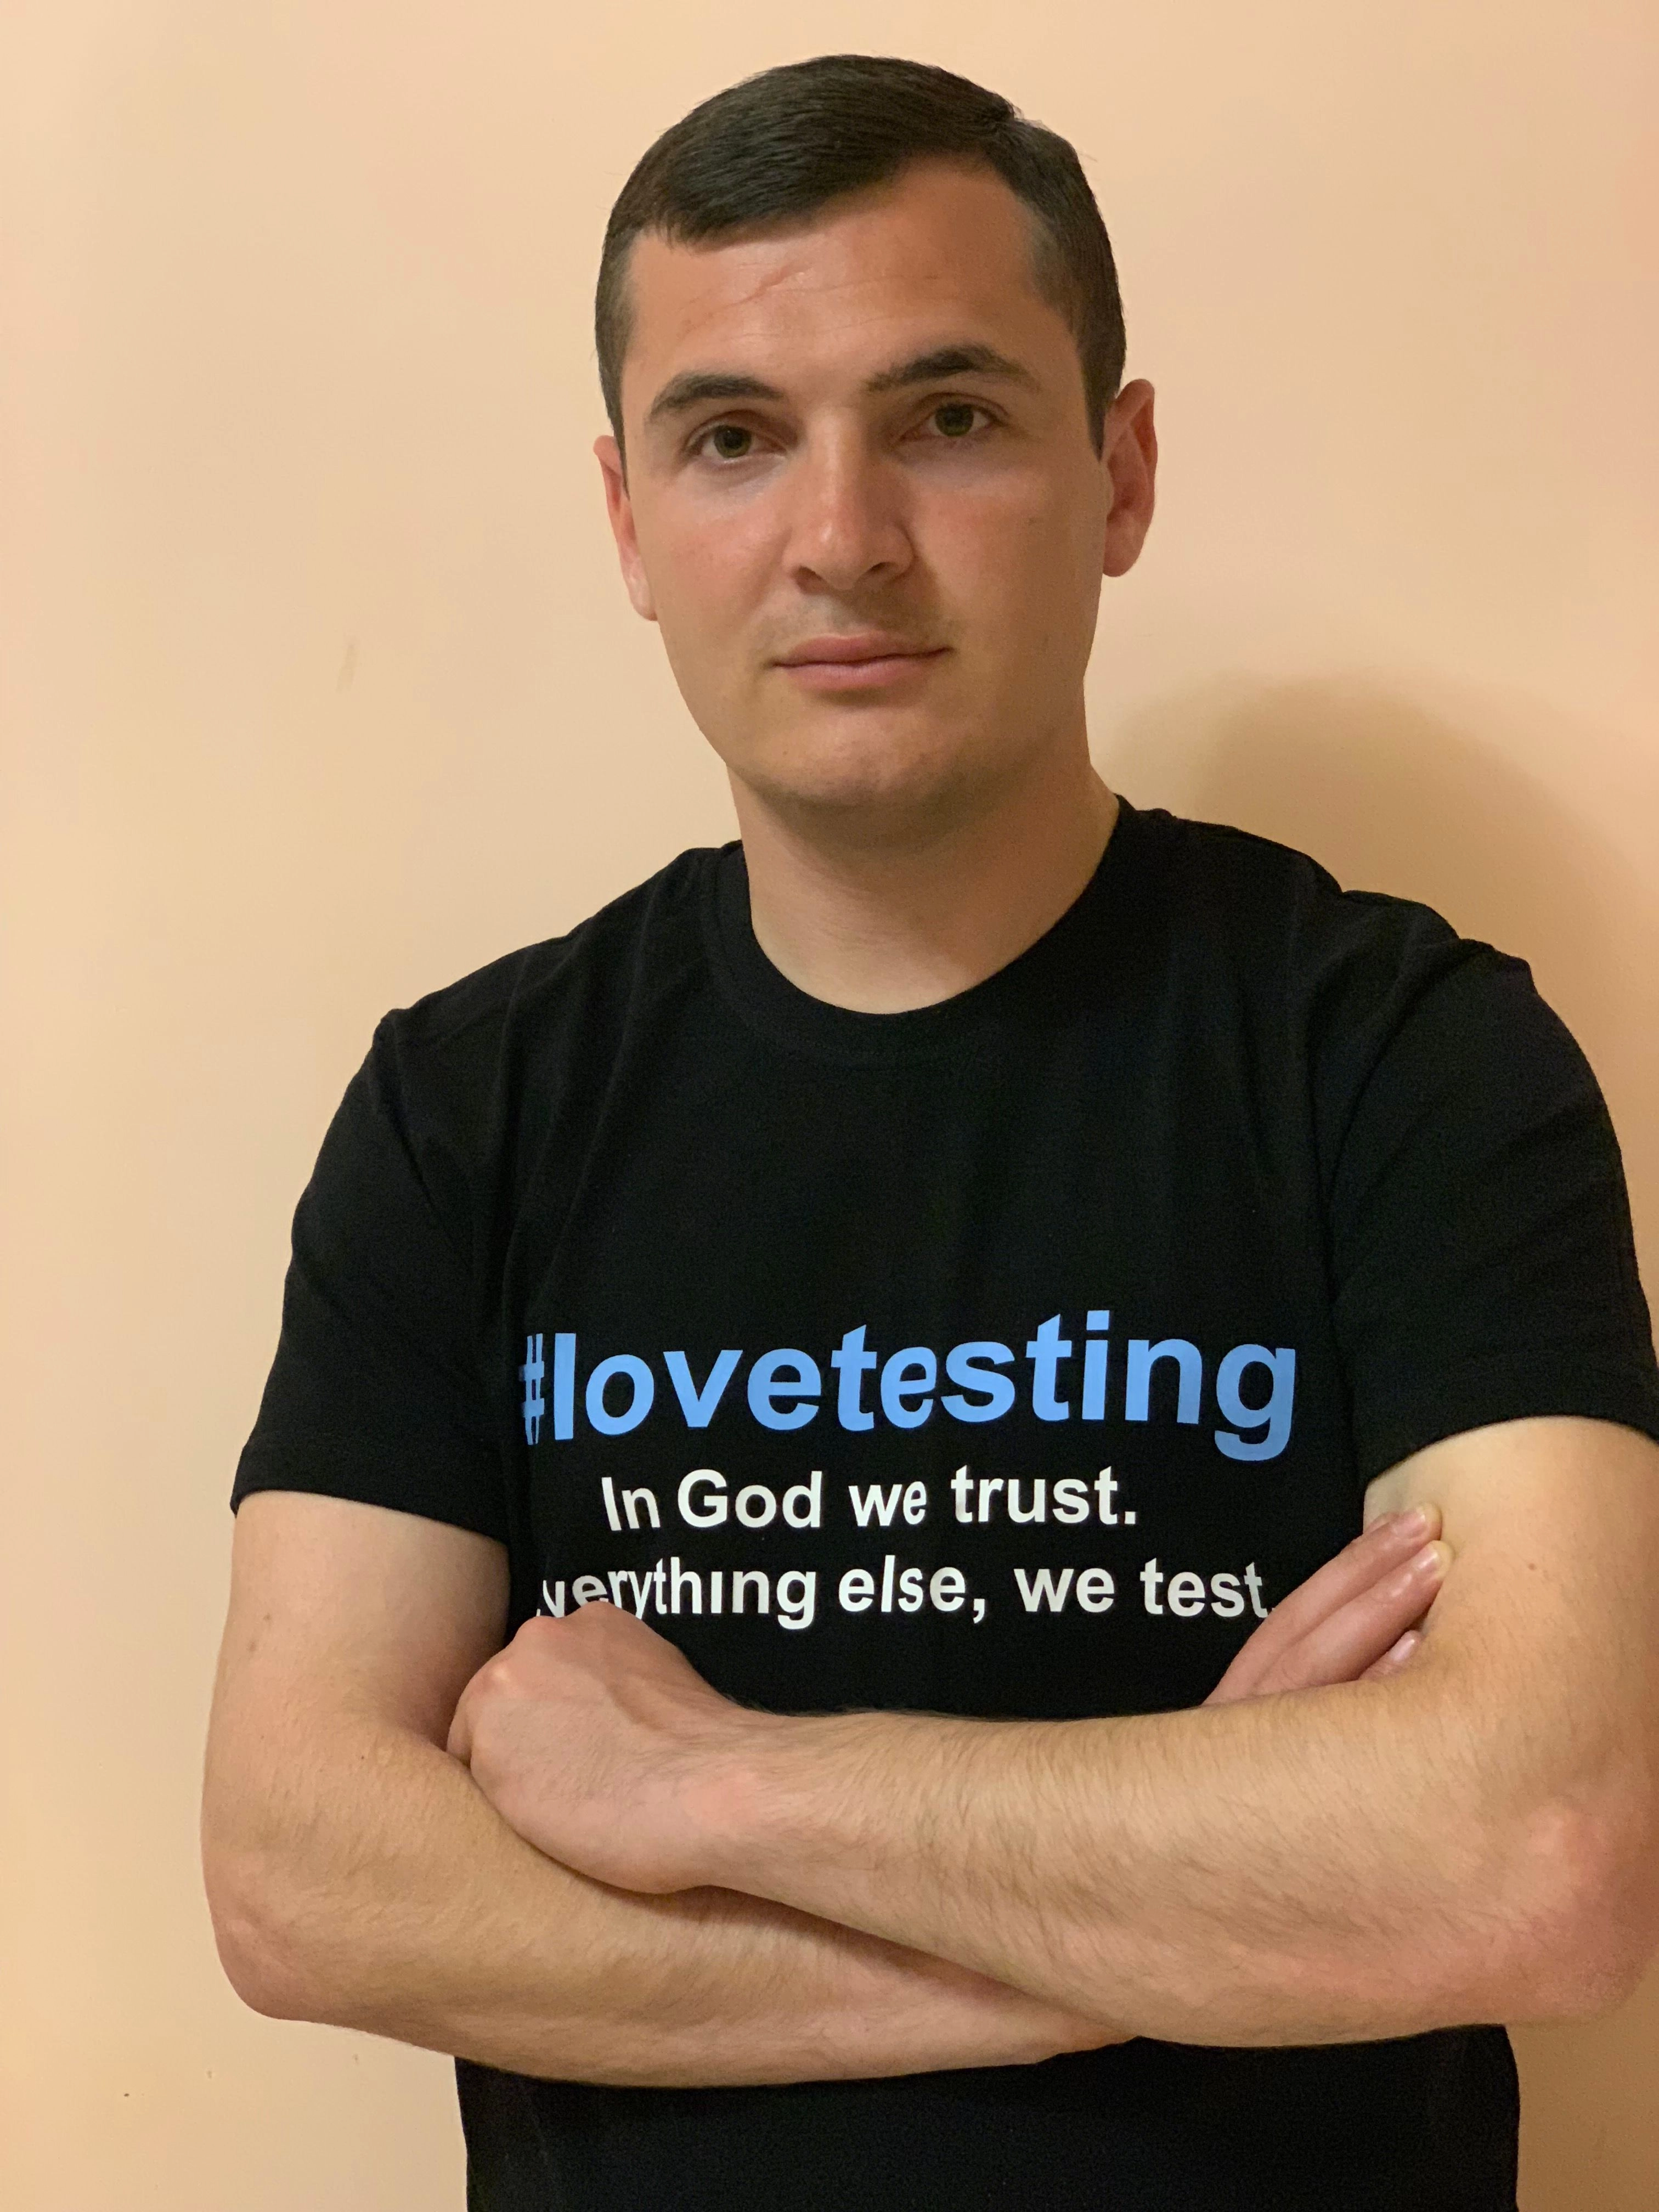 Meet a tester from Testlio